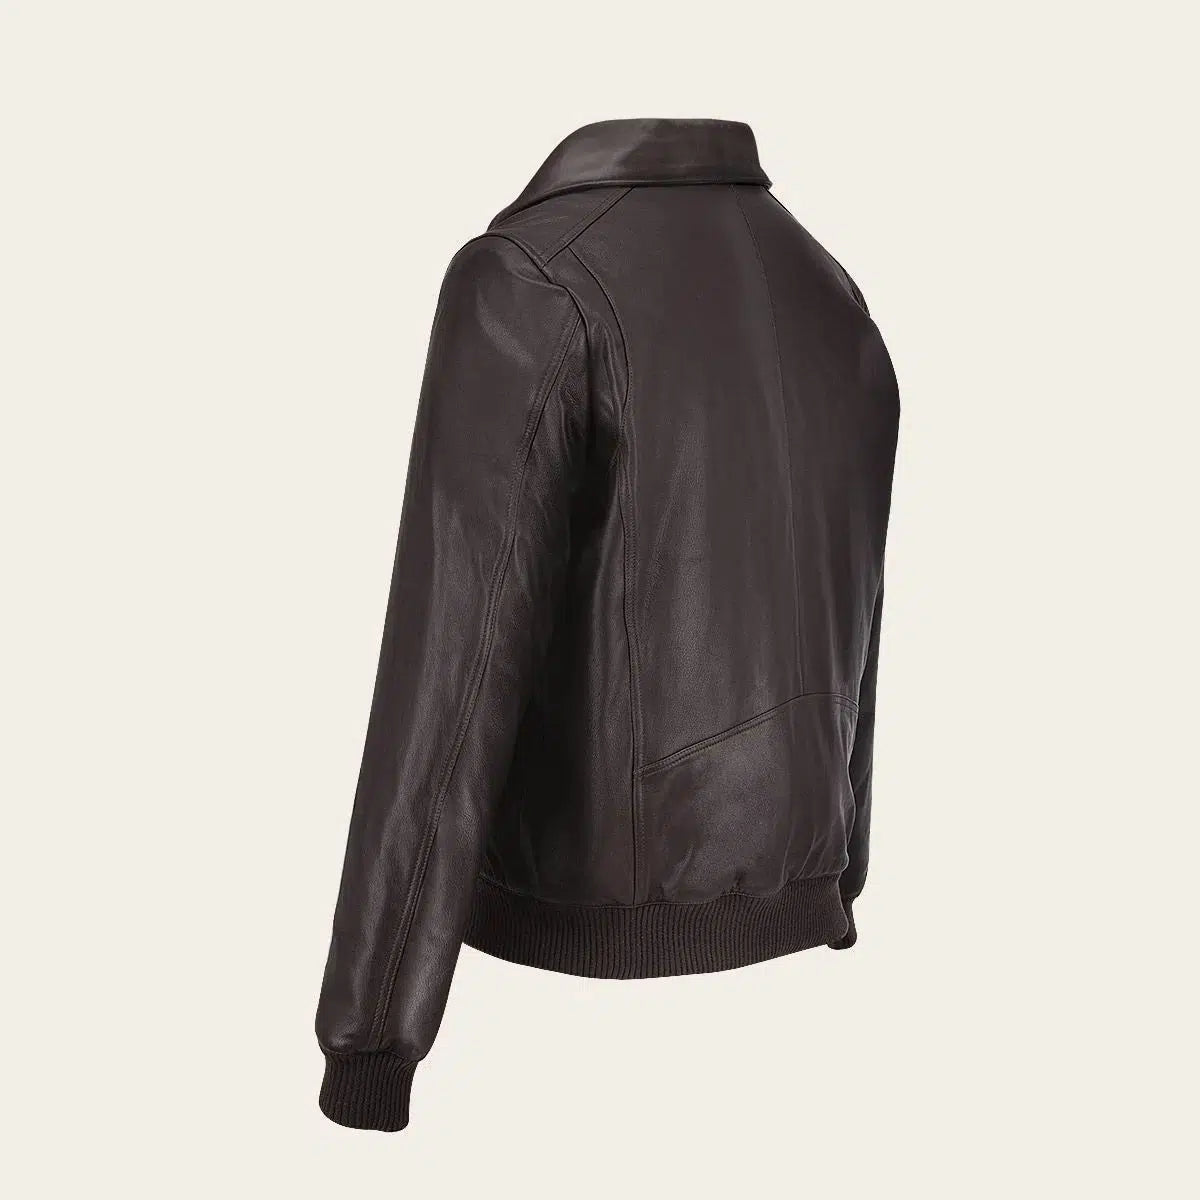 HCHI008 - Cuadra brown dress casual fashion aviator leather jacket for men-Kuet.us - Cuadra Boots - Western Cowboy, Casual Fashion and Dress Boots